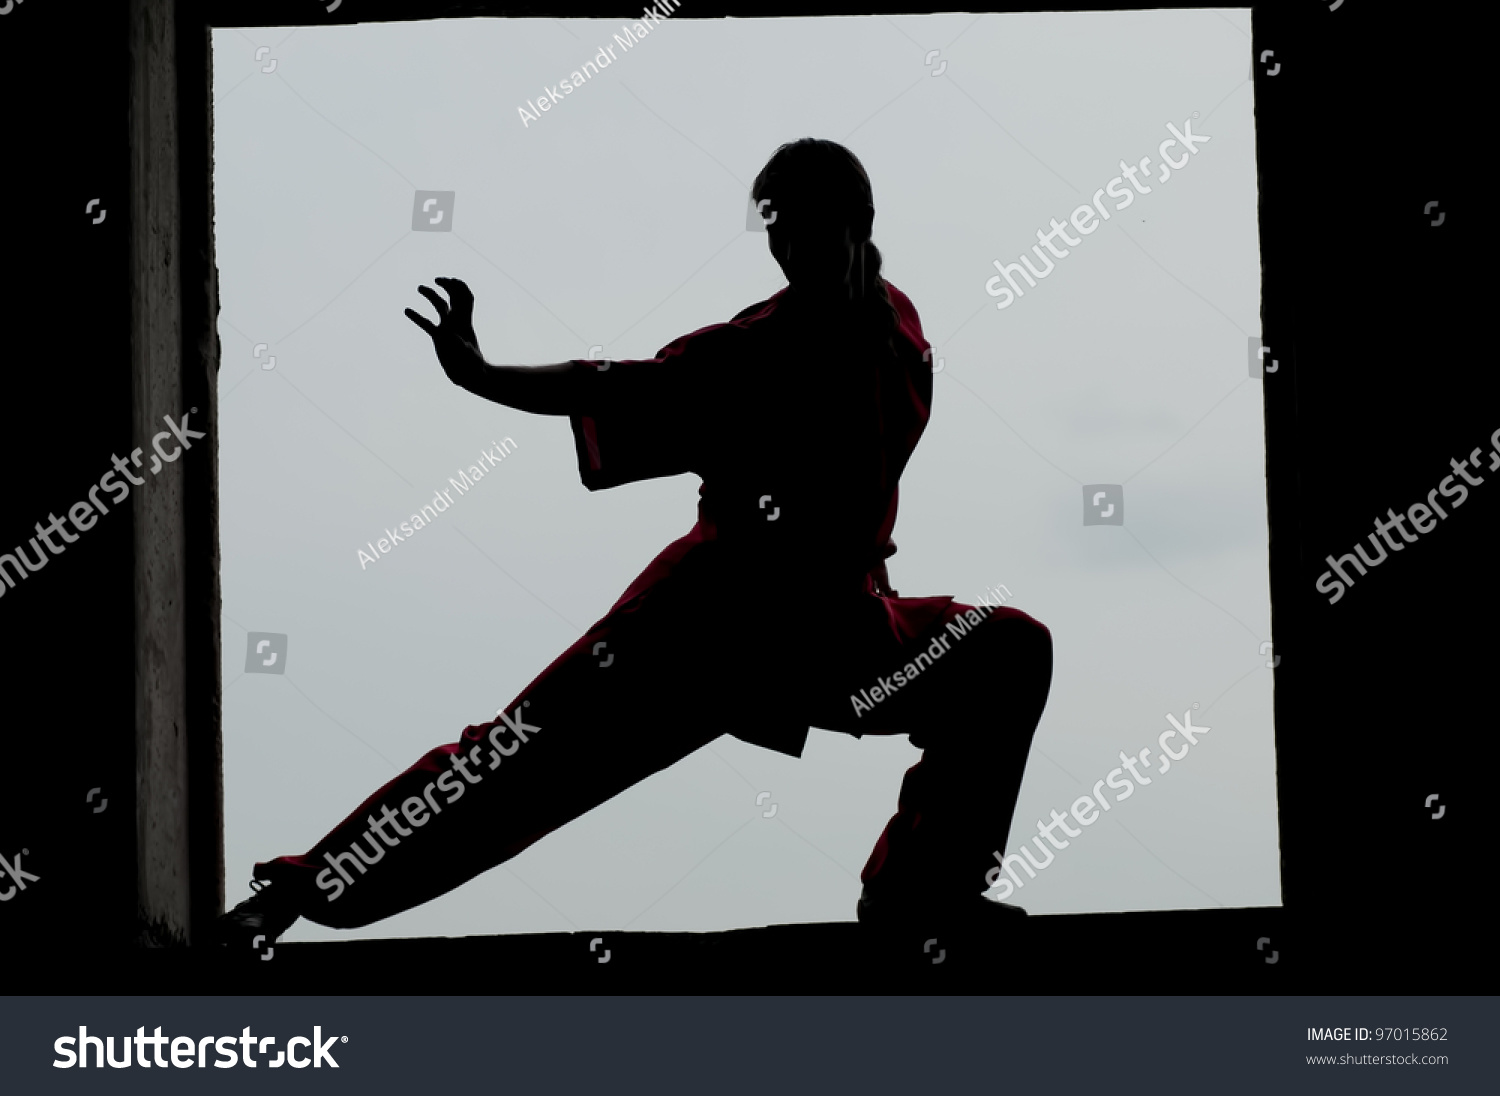 Shaolin Warriors Wushoo Man Silhouette Practice Stock Photo 97015862 ...